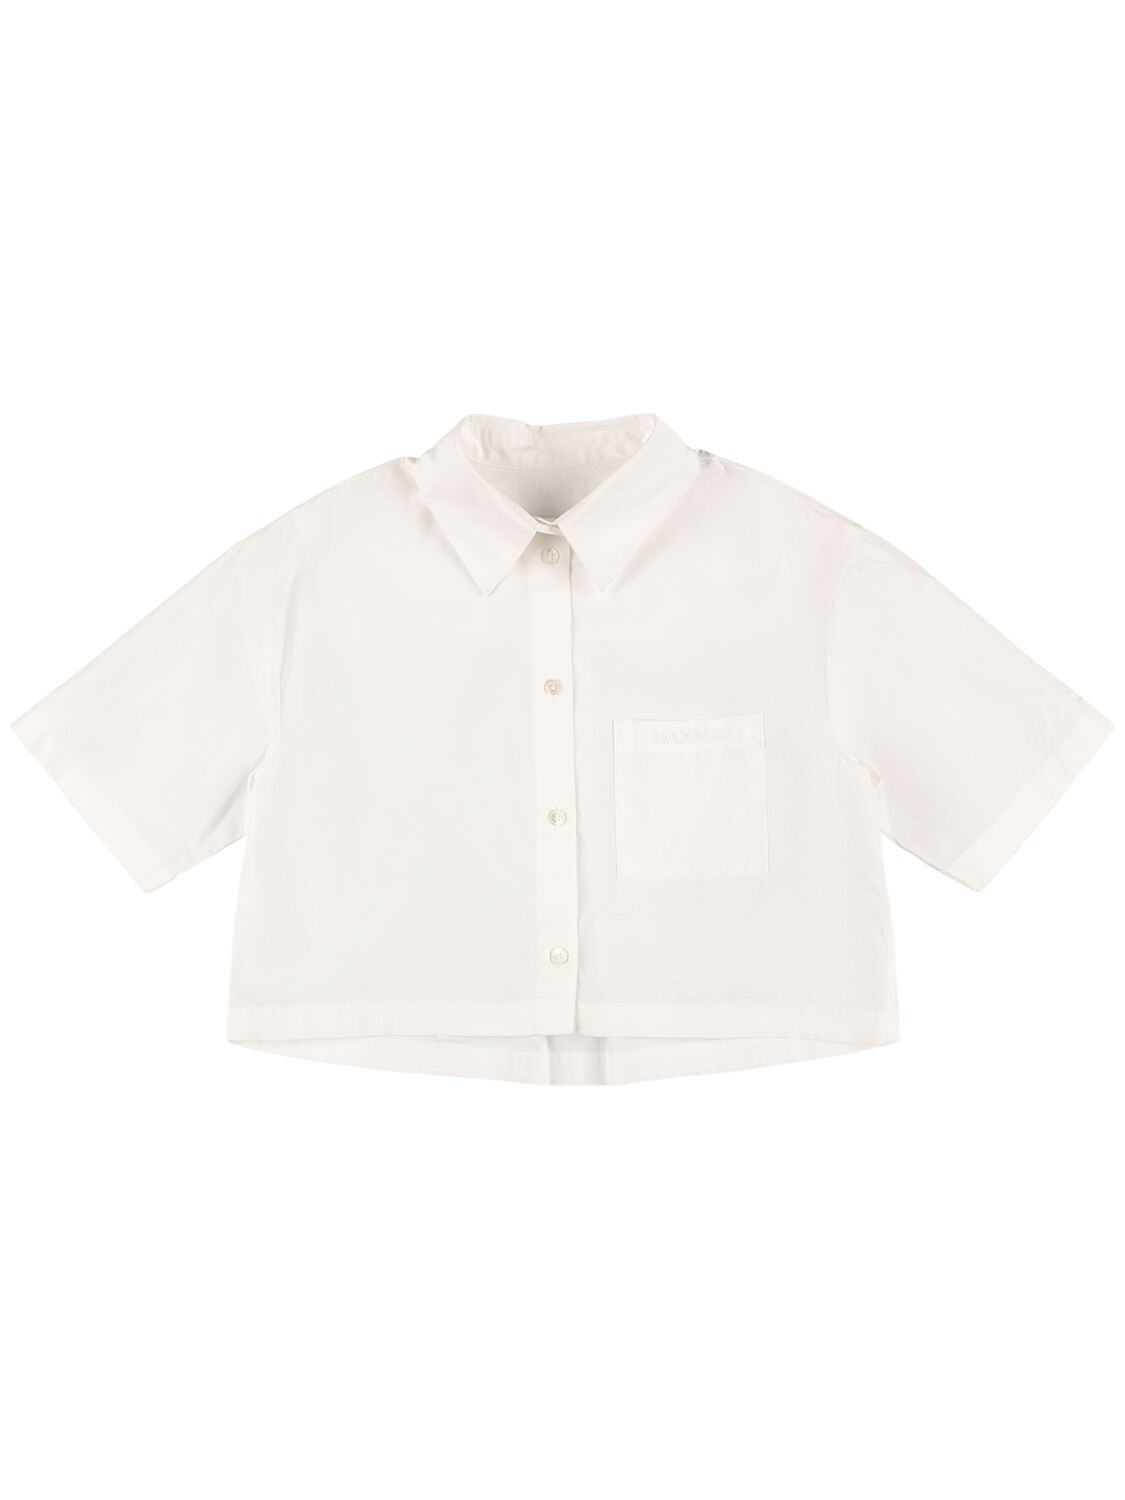 Max & Co Kids' Cotton Poplin Shirt In White